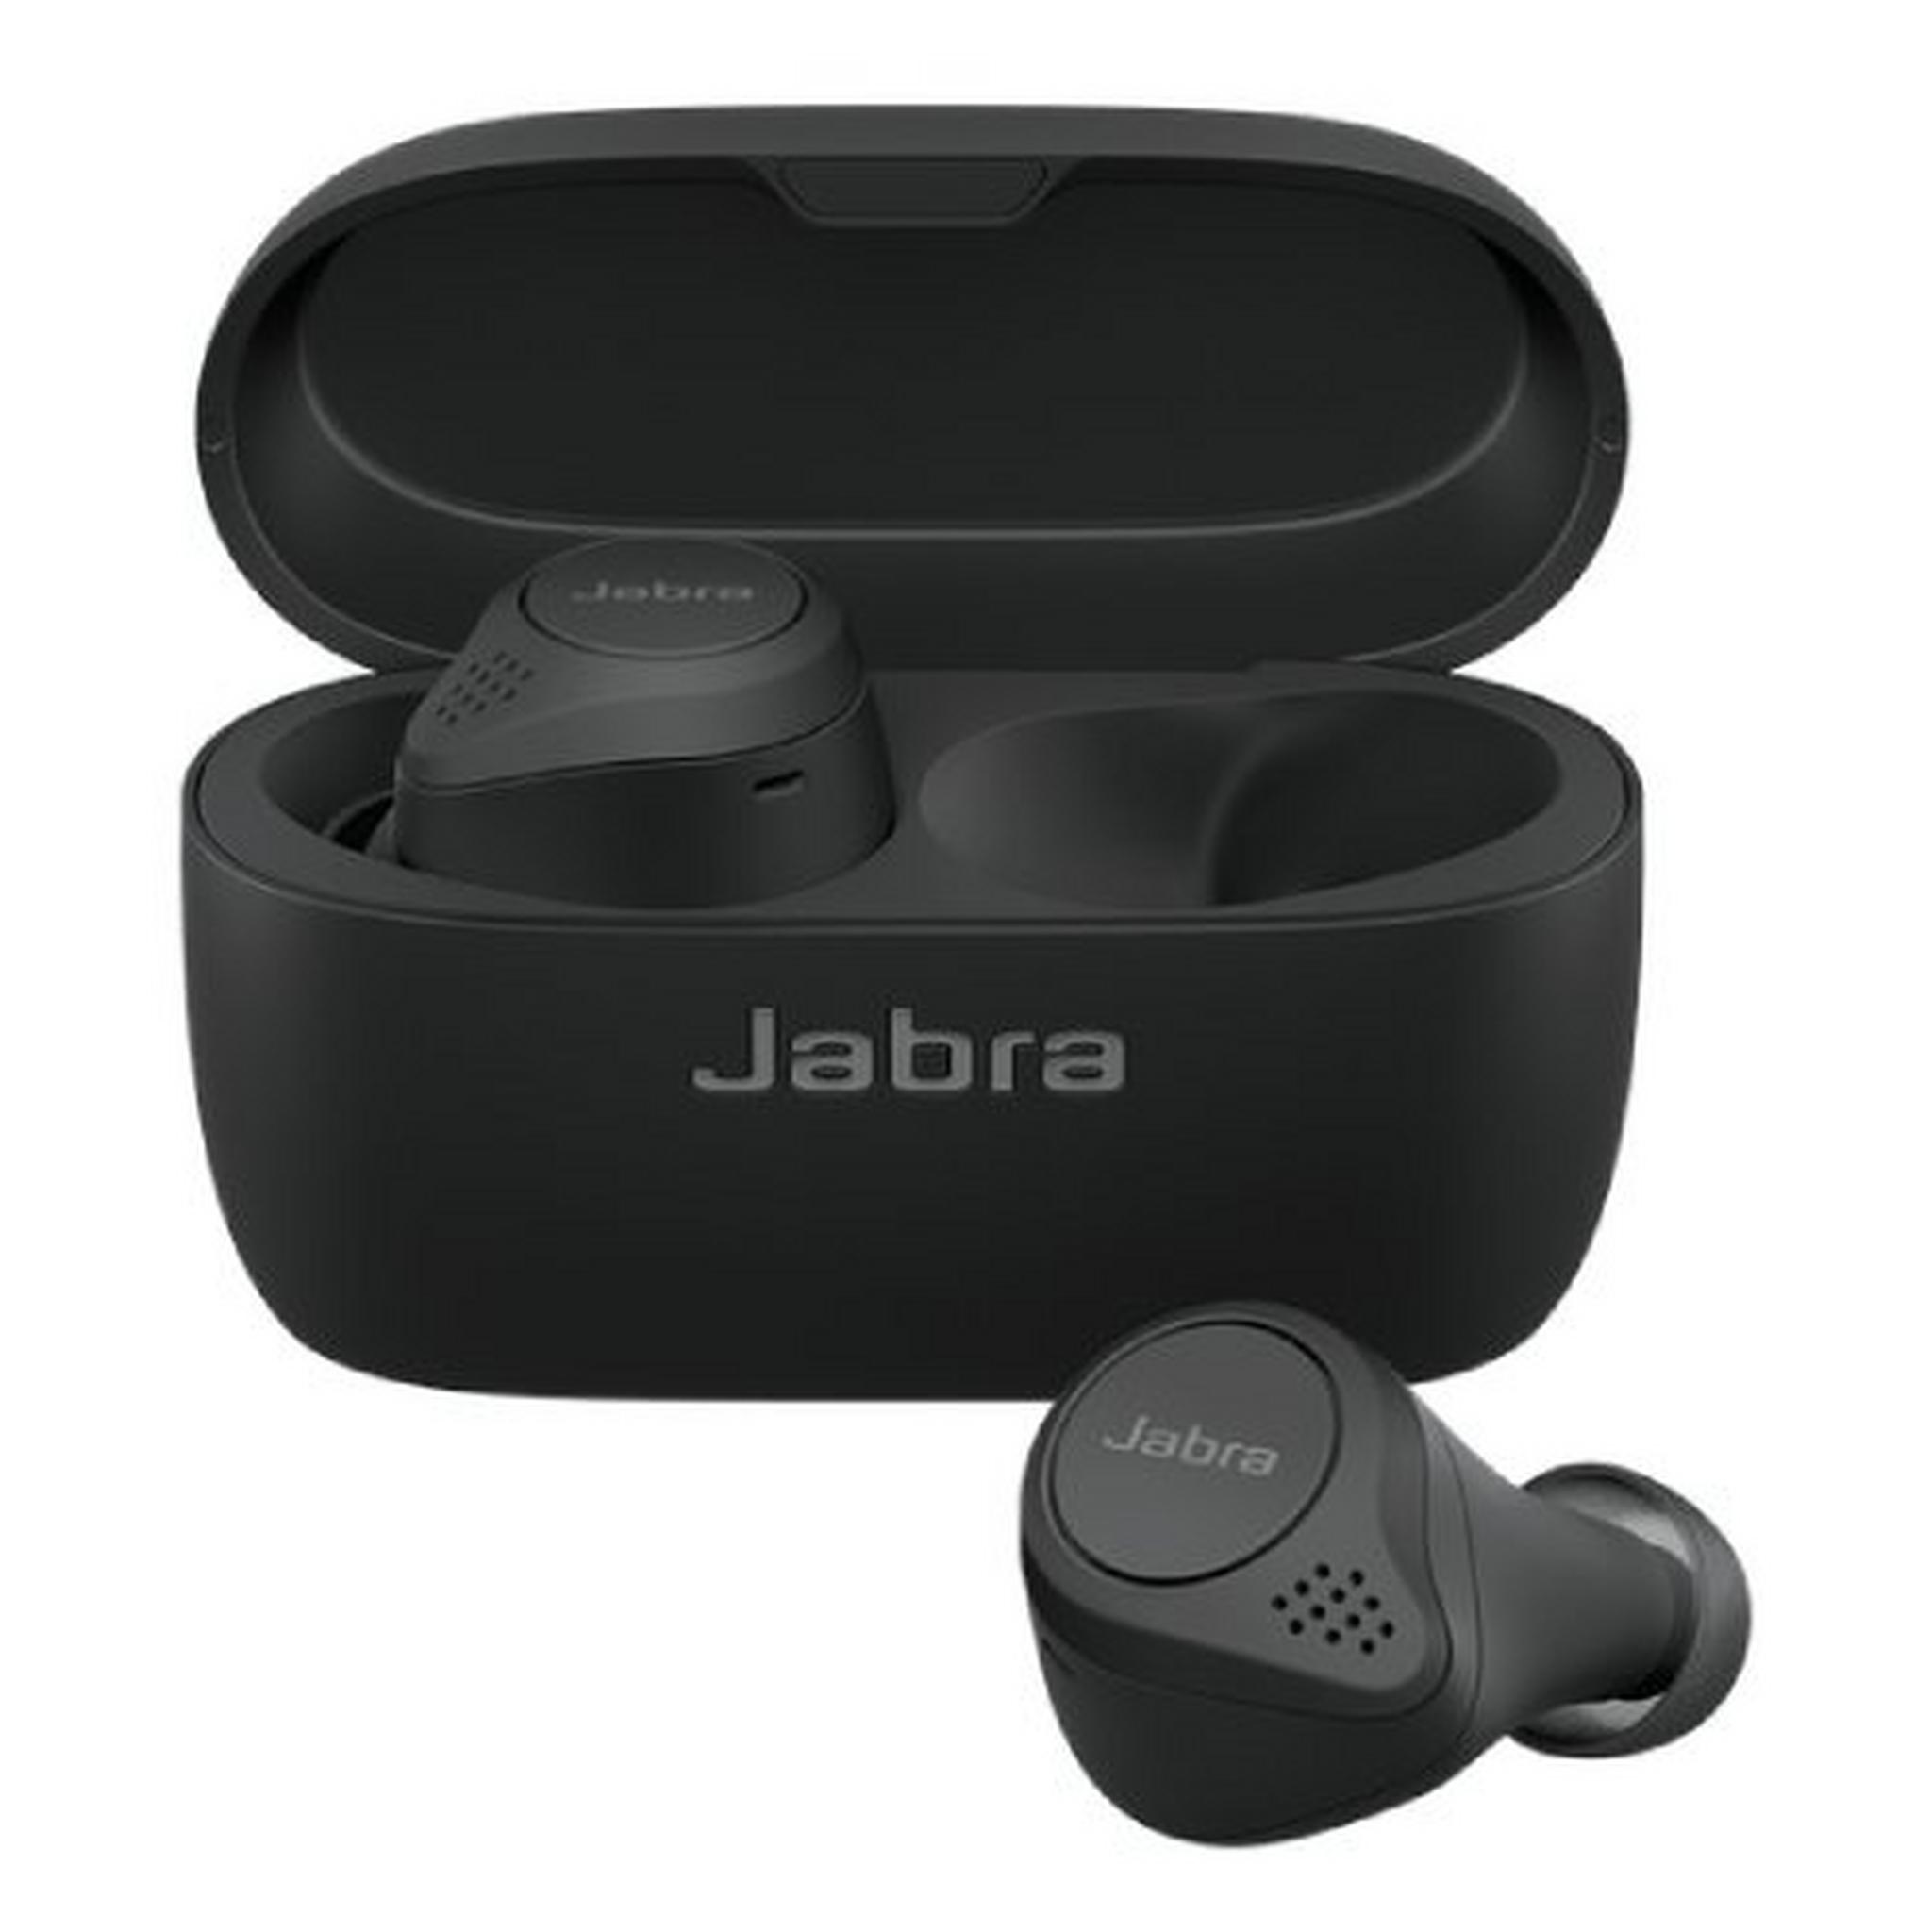 Jabra Elite 75T Active Noise Cancelation, True Wireless Earphones – Black